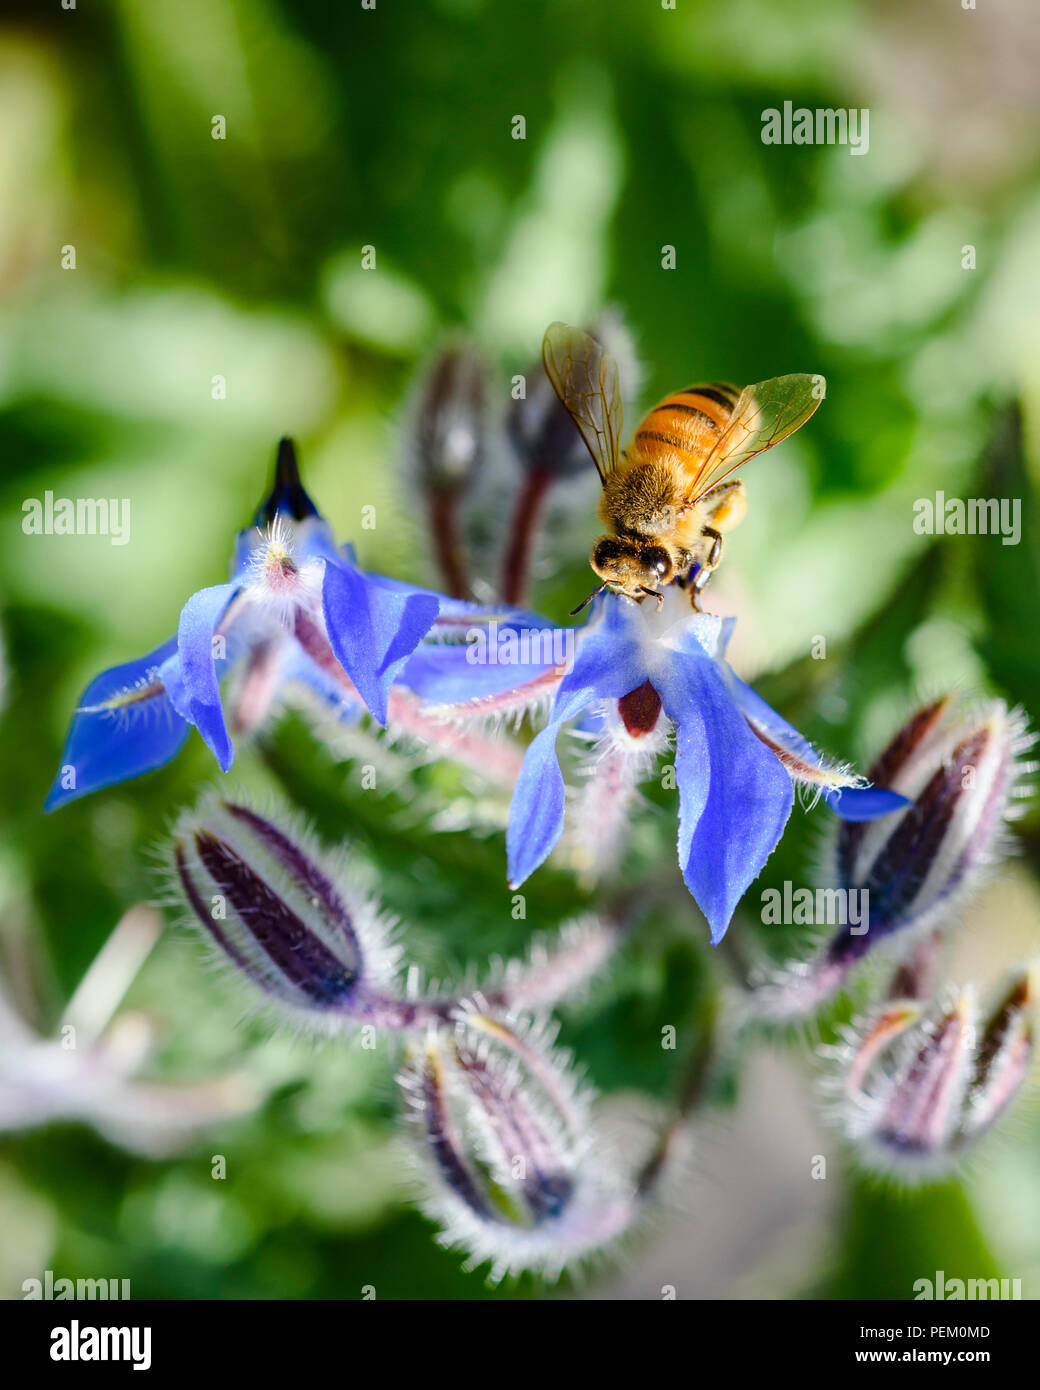 Bee on borage flower, Australia, close up view Stock Photo